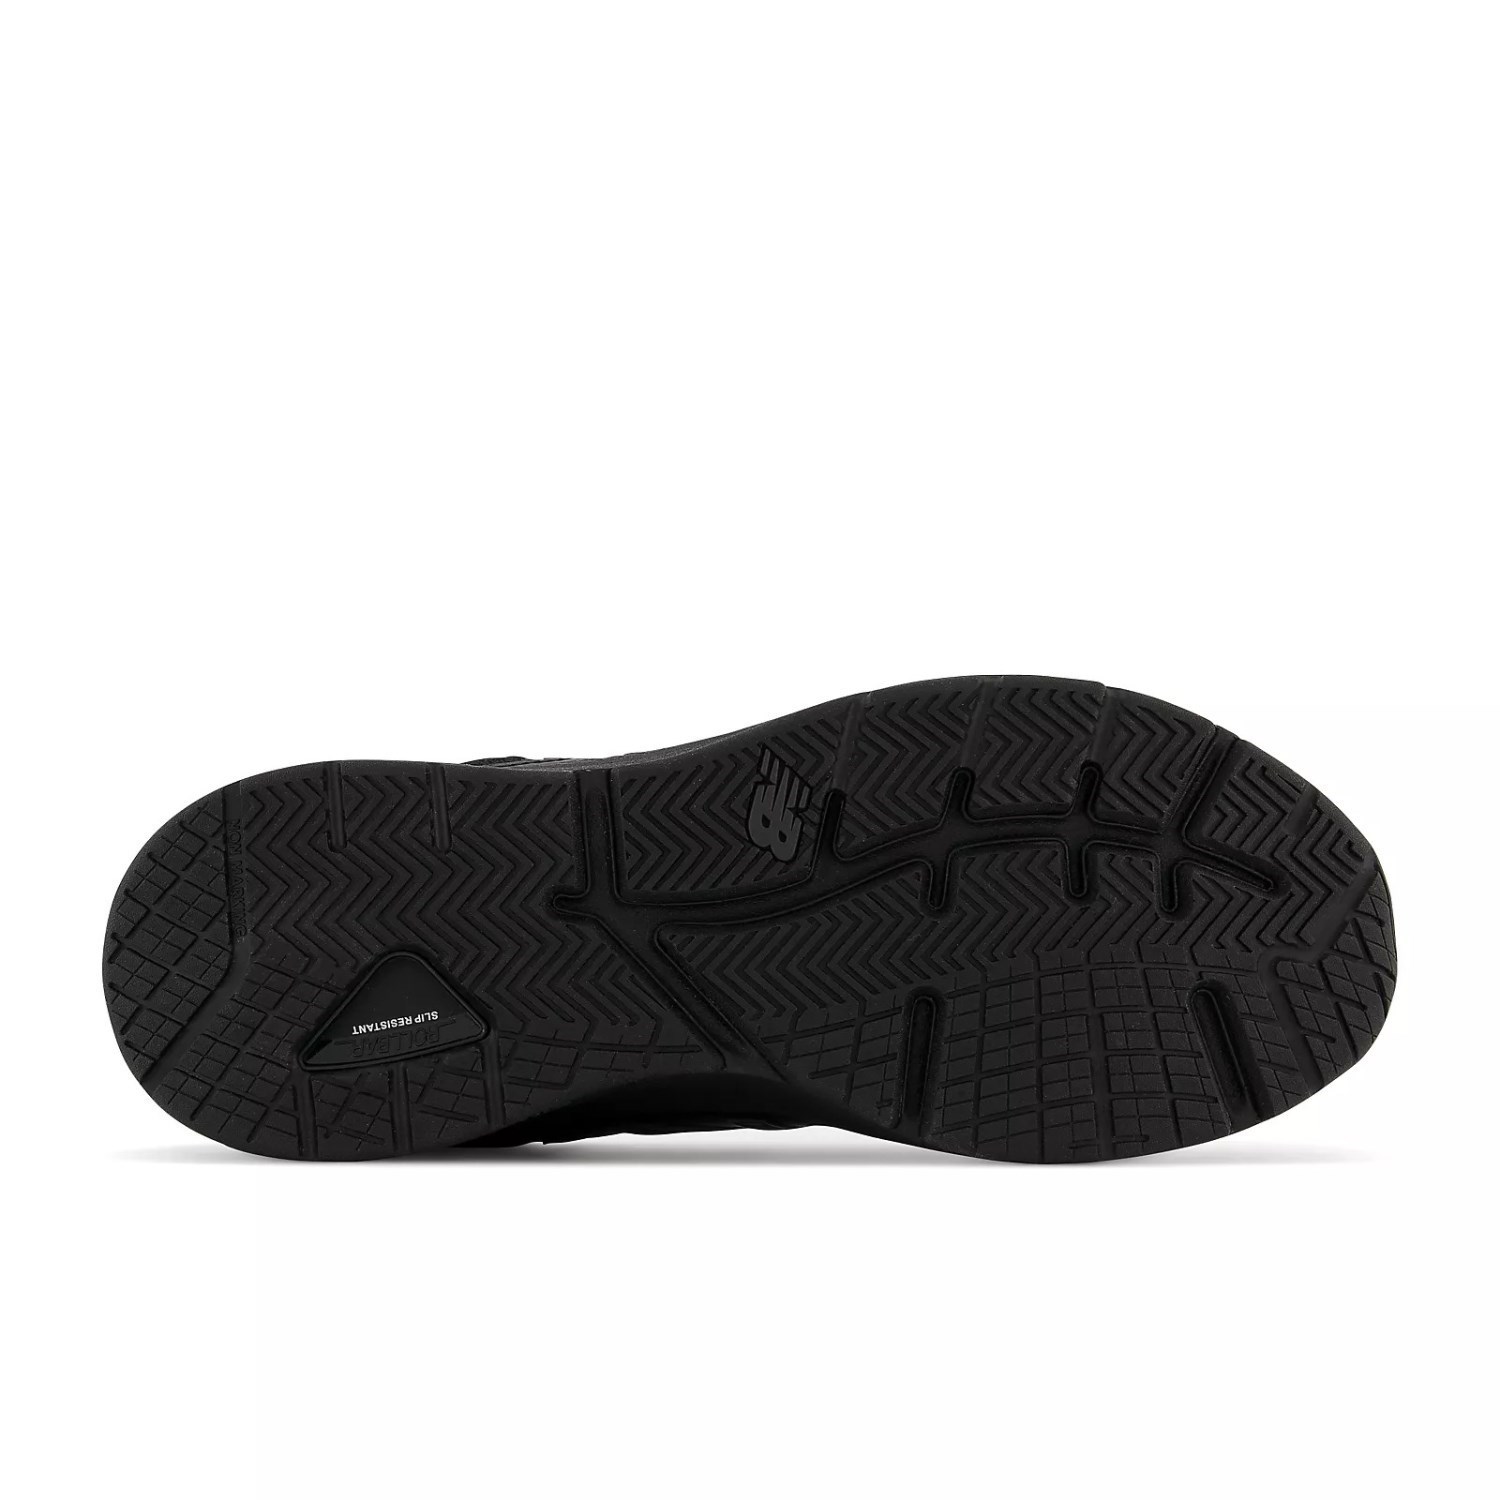 New Balance 857v3 - Mens Walking Shoes - Black | Sportitude